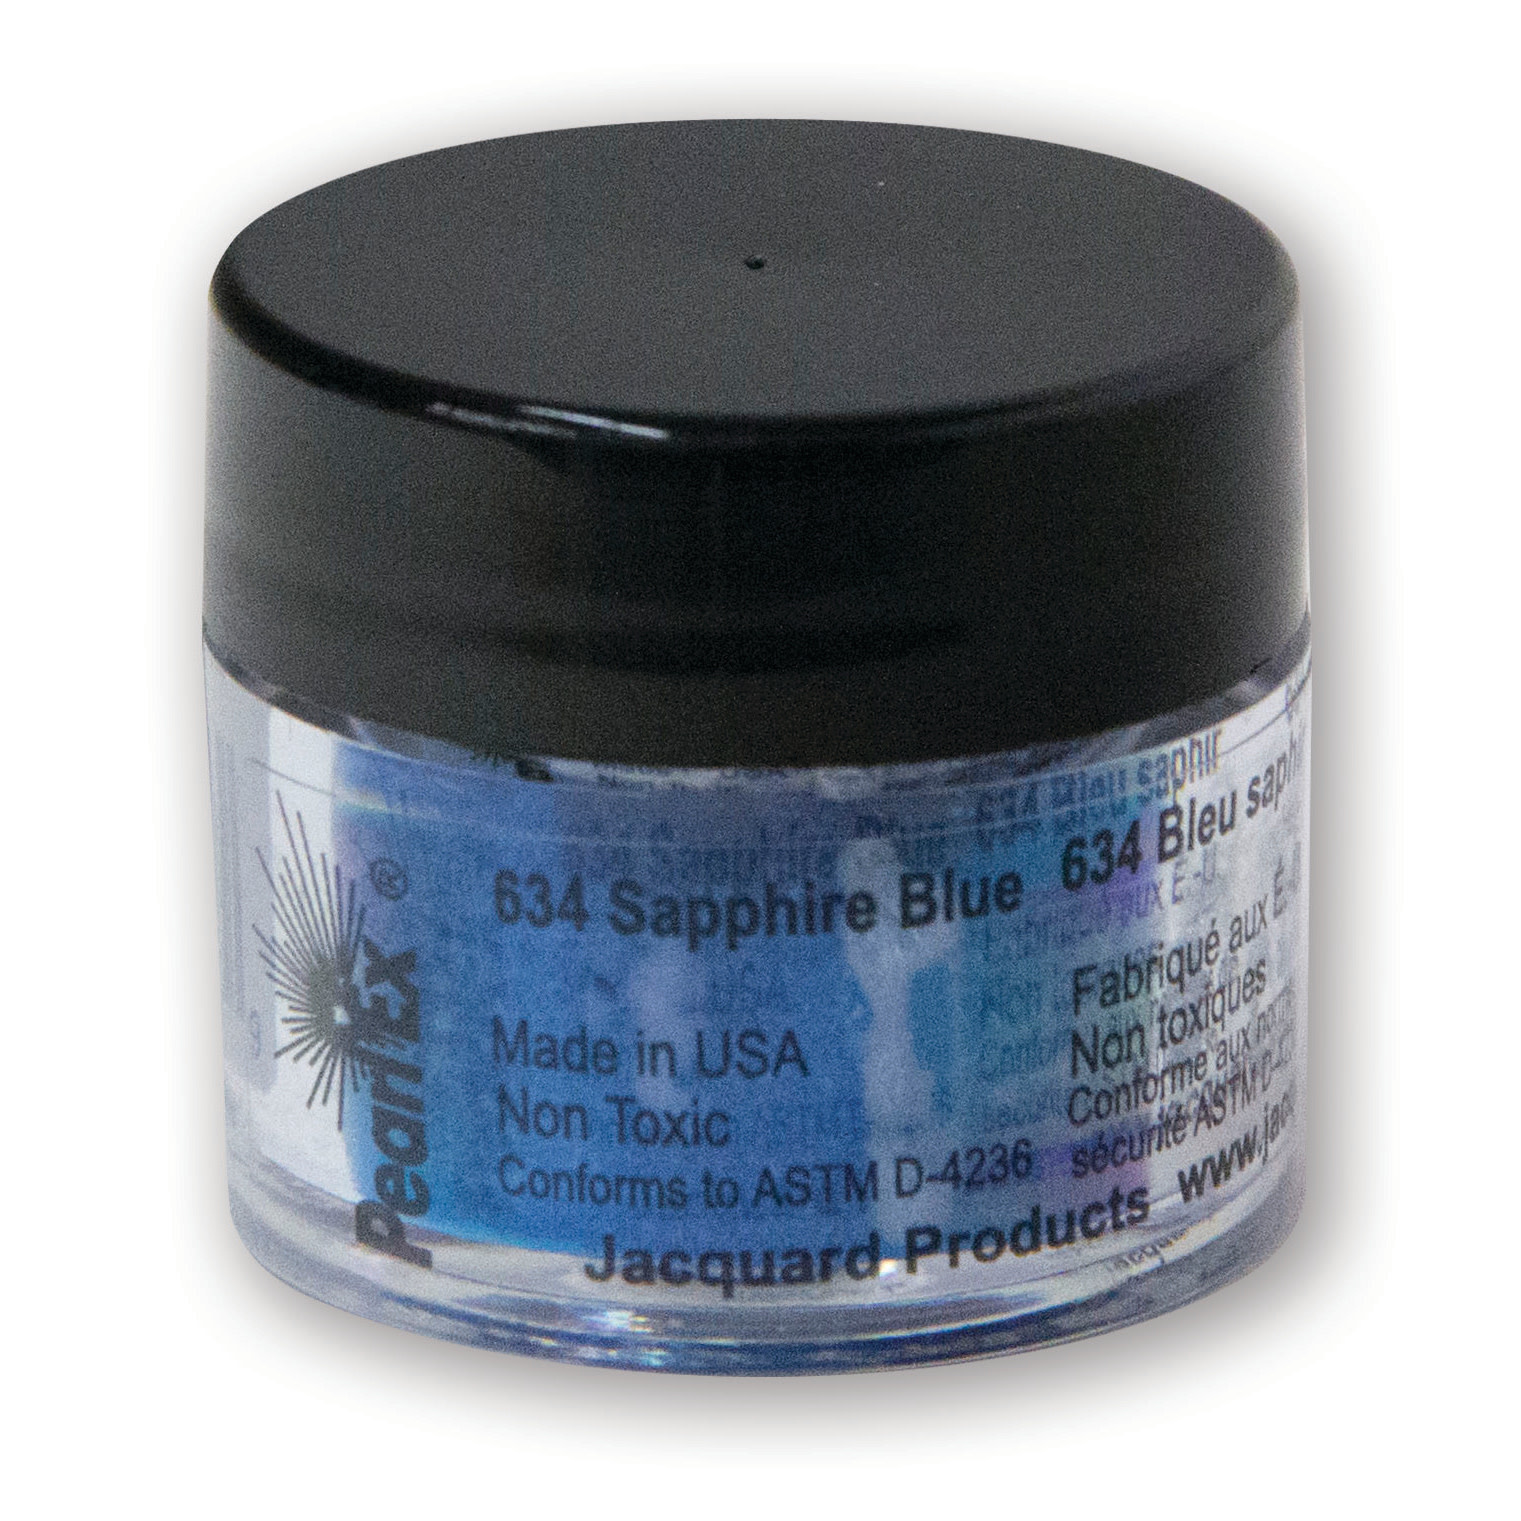 Jacquard Pearl Ex Powdered Pigments, 3g Jars, Sapphire Blue